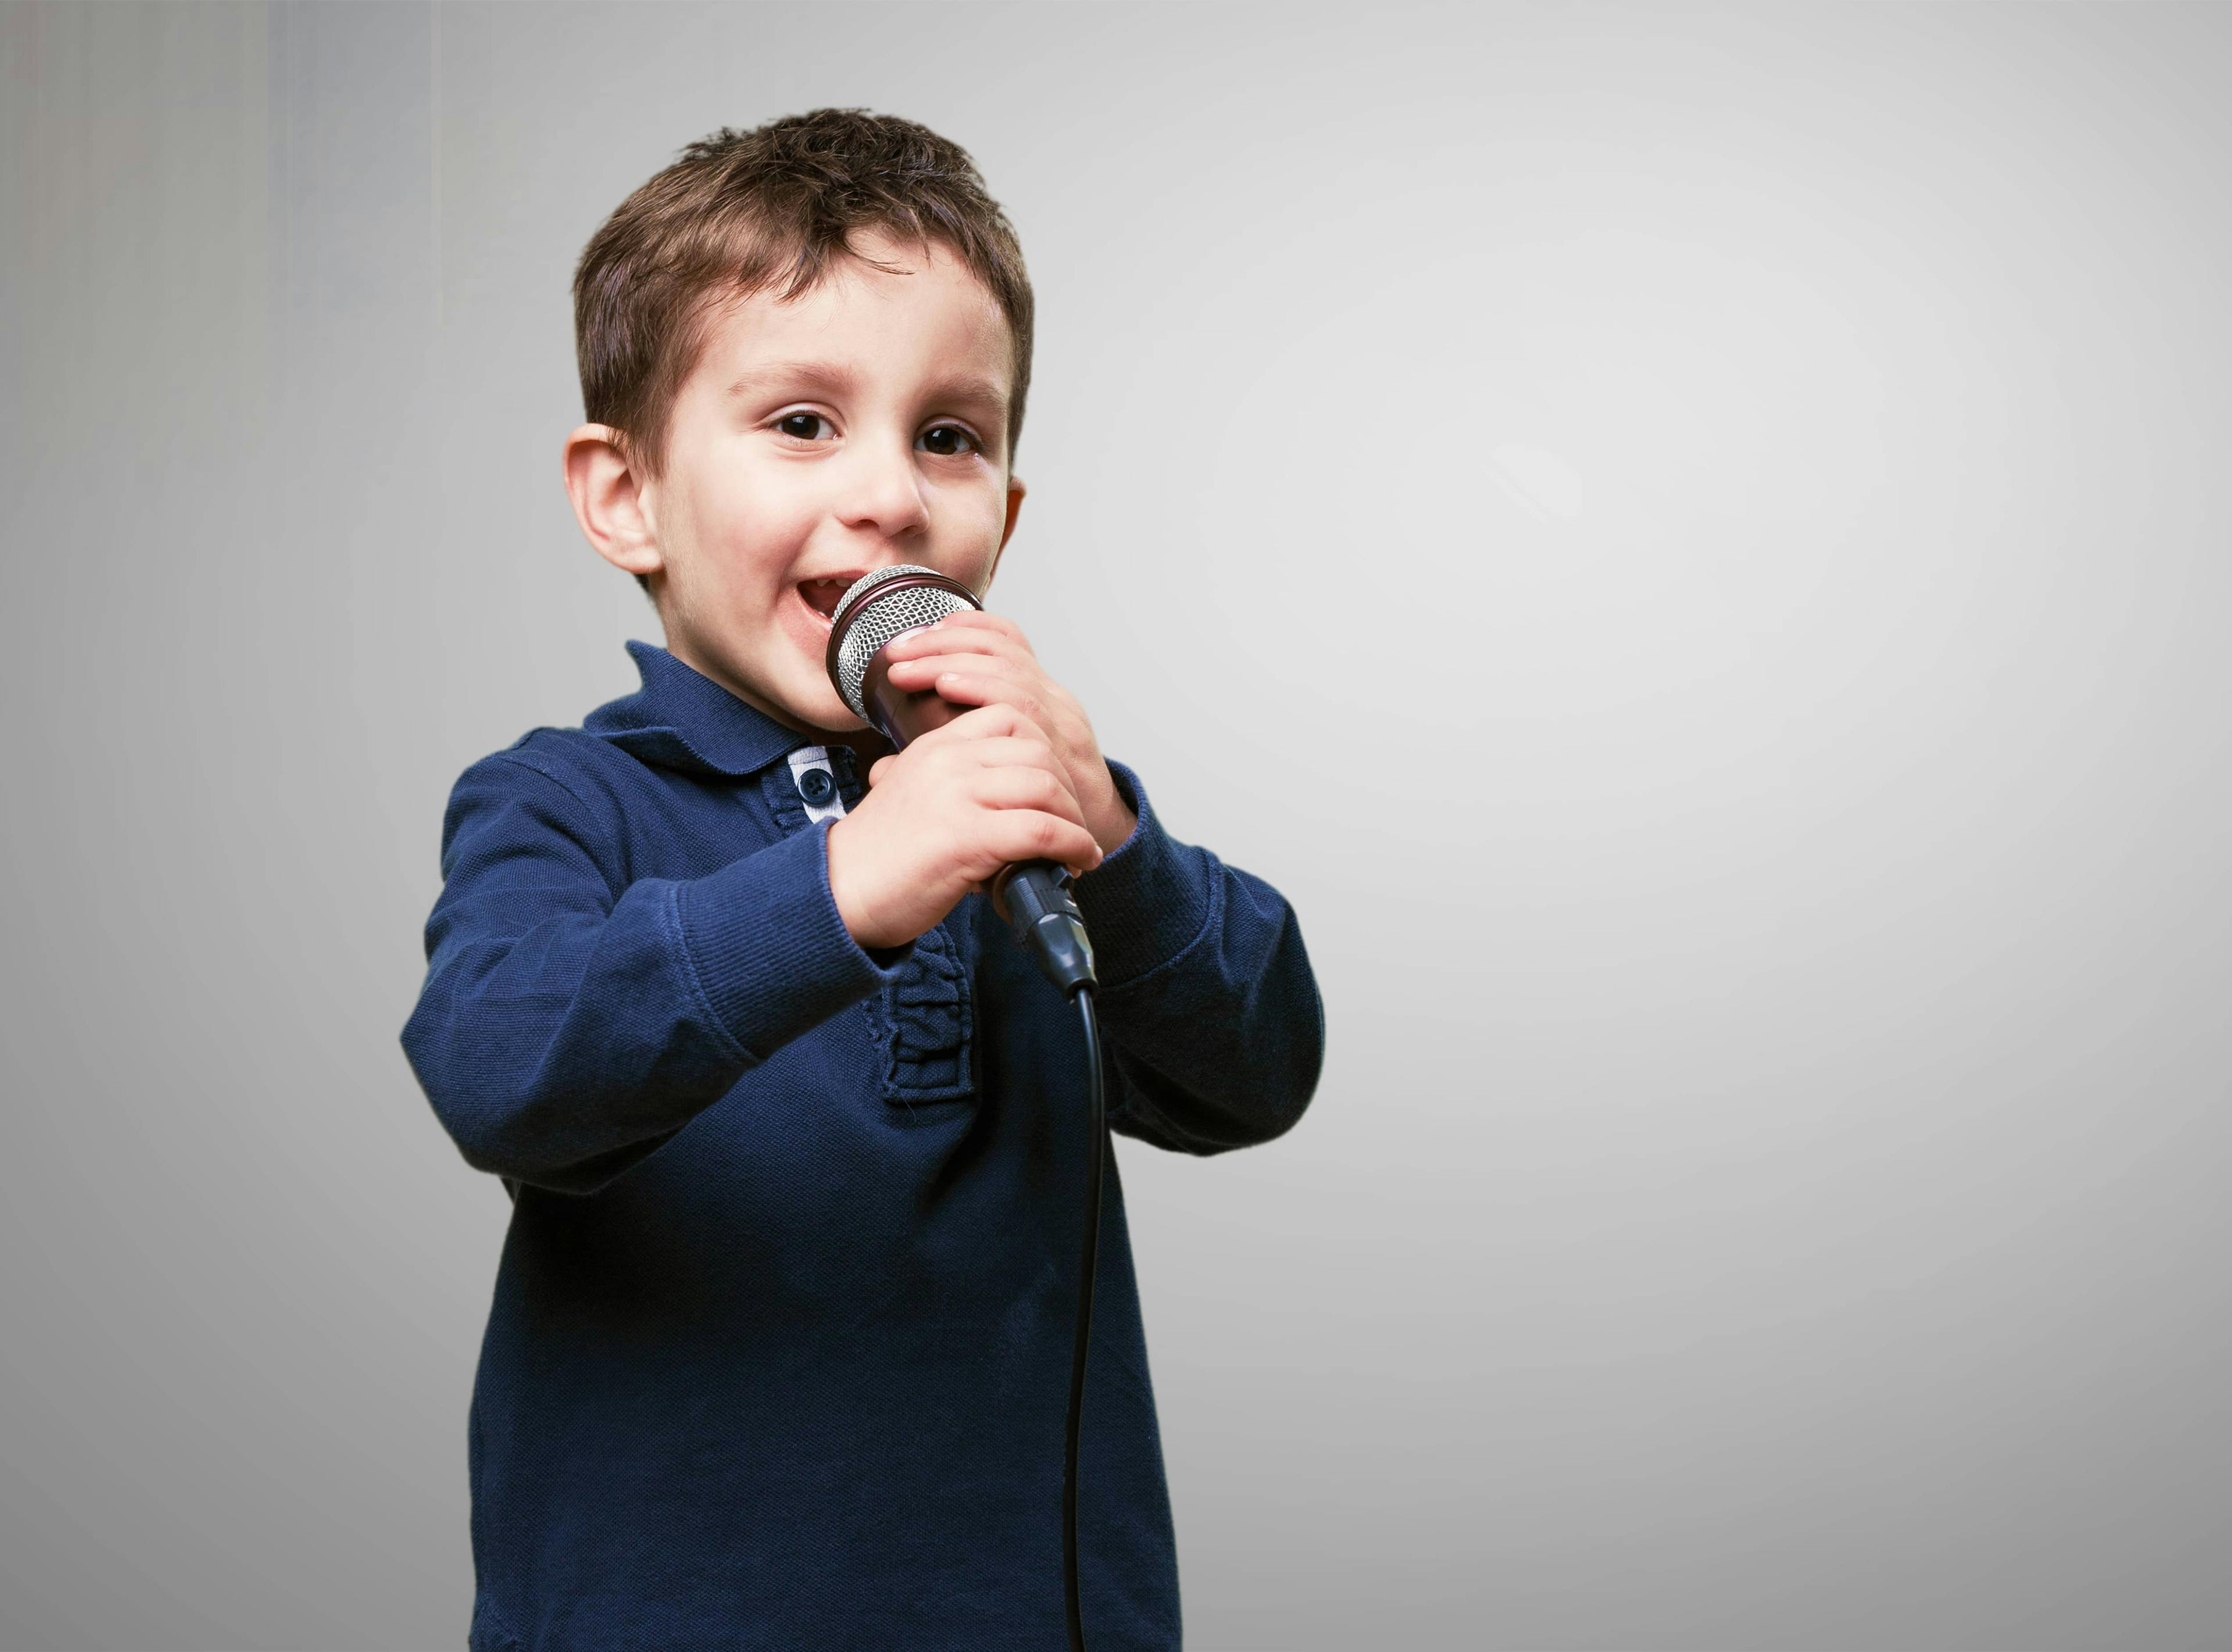 Benefits of Singing for Children